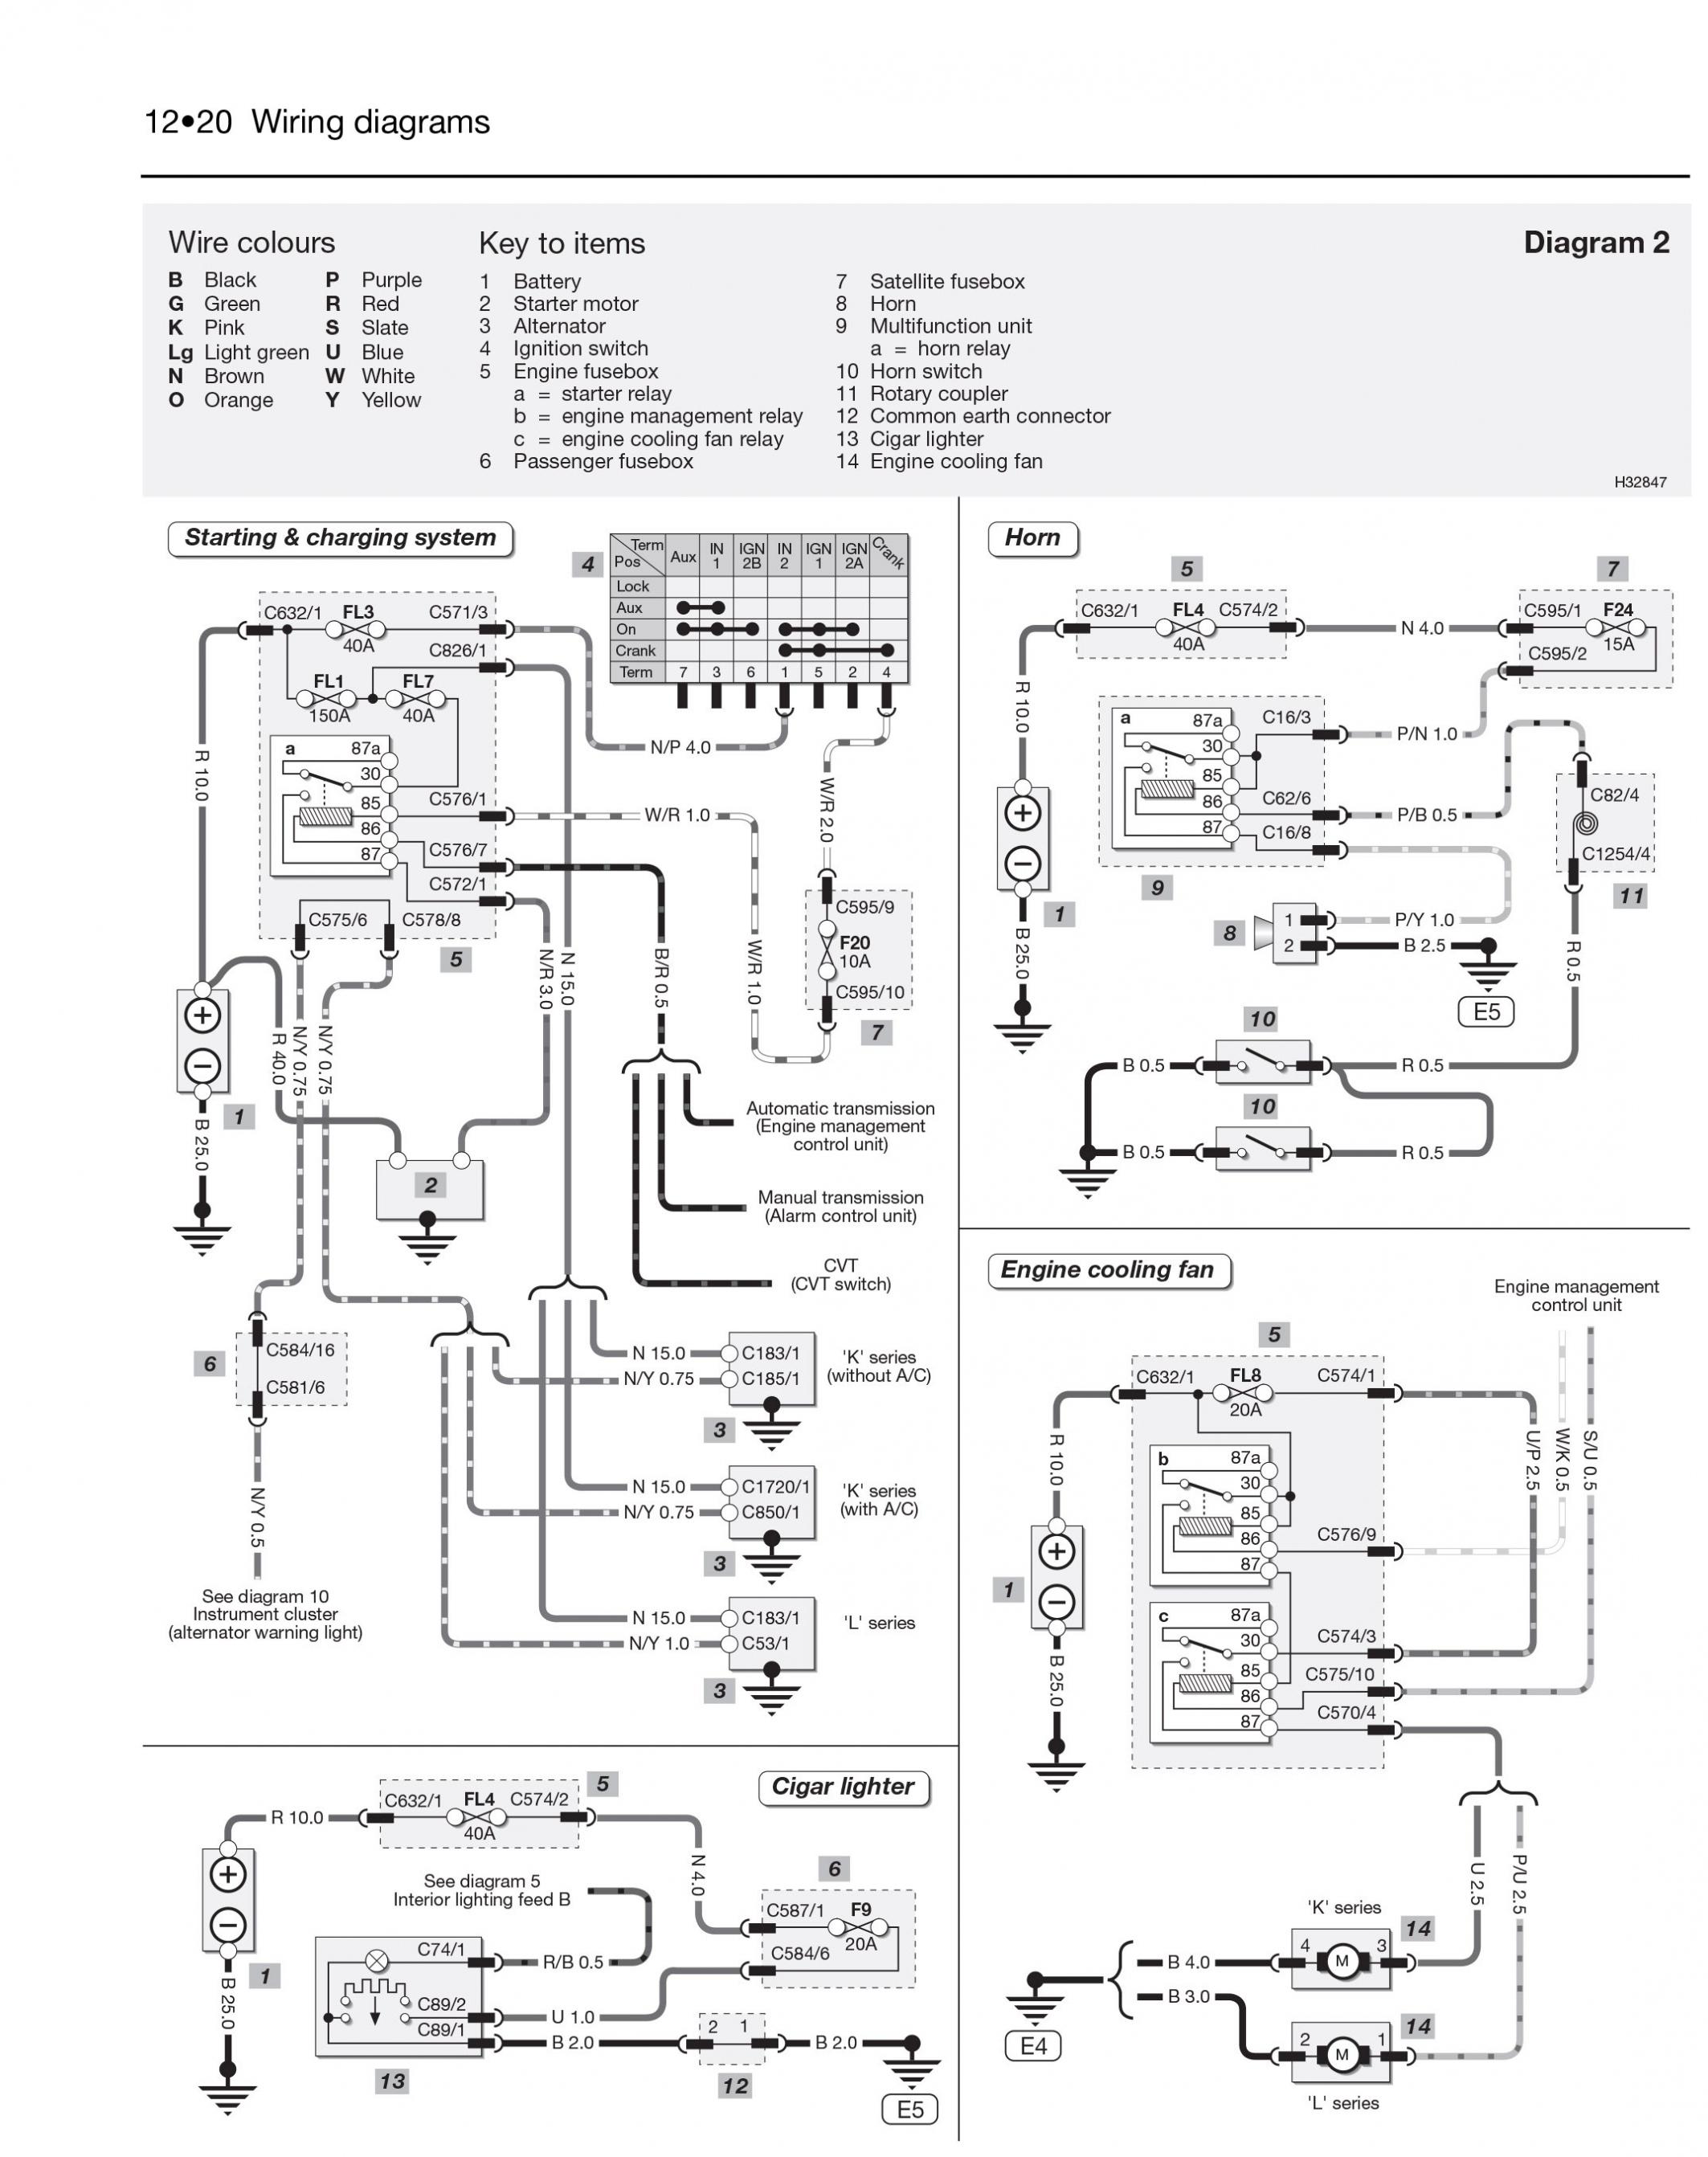 [DIAGRAM] 1973 Mg Mgb Wiring Diagram FULL Version HD Quality Wiring